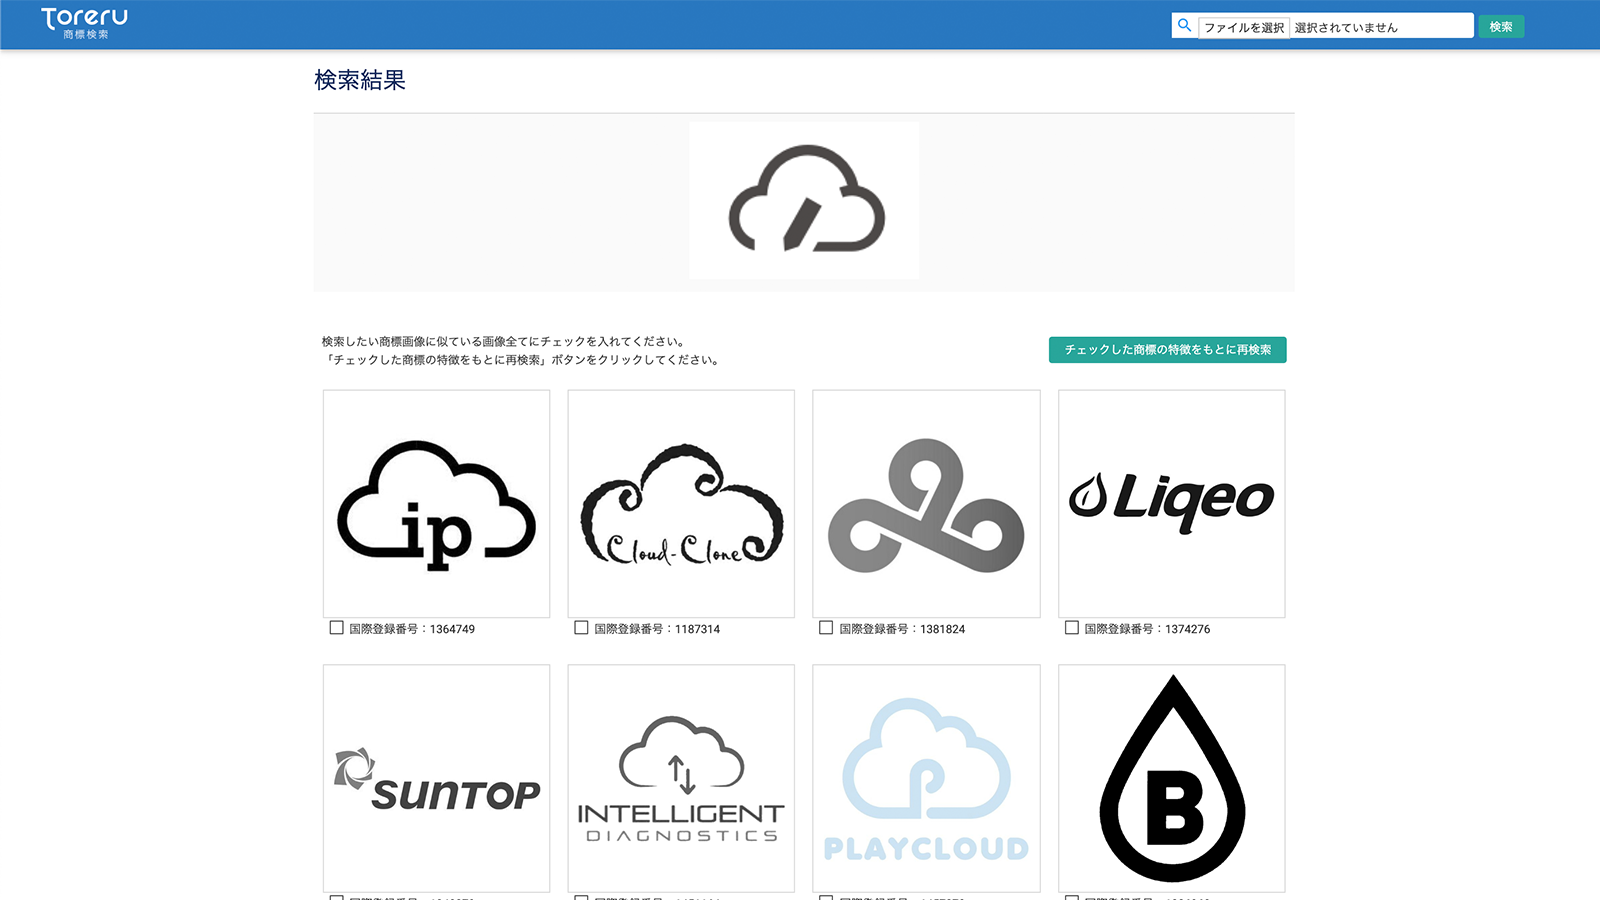 Toreruの画像商標検索 https://search.toreru.jp/ でクラウドサインの雲マークを画像検索